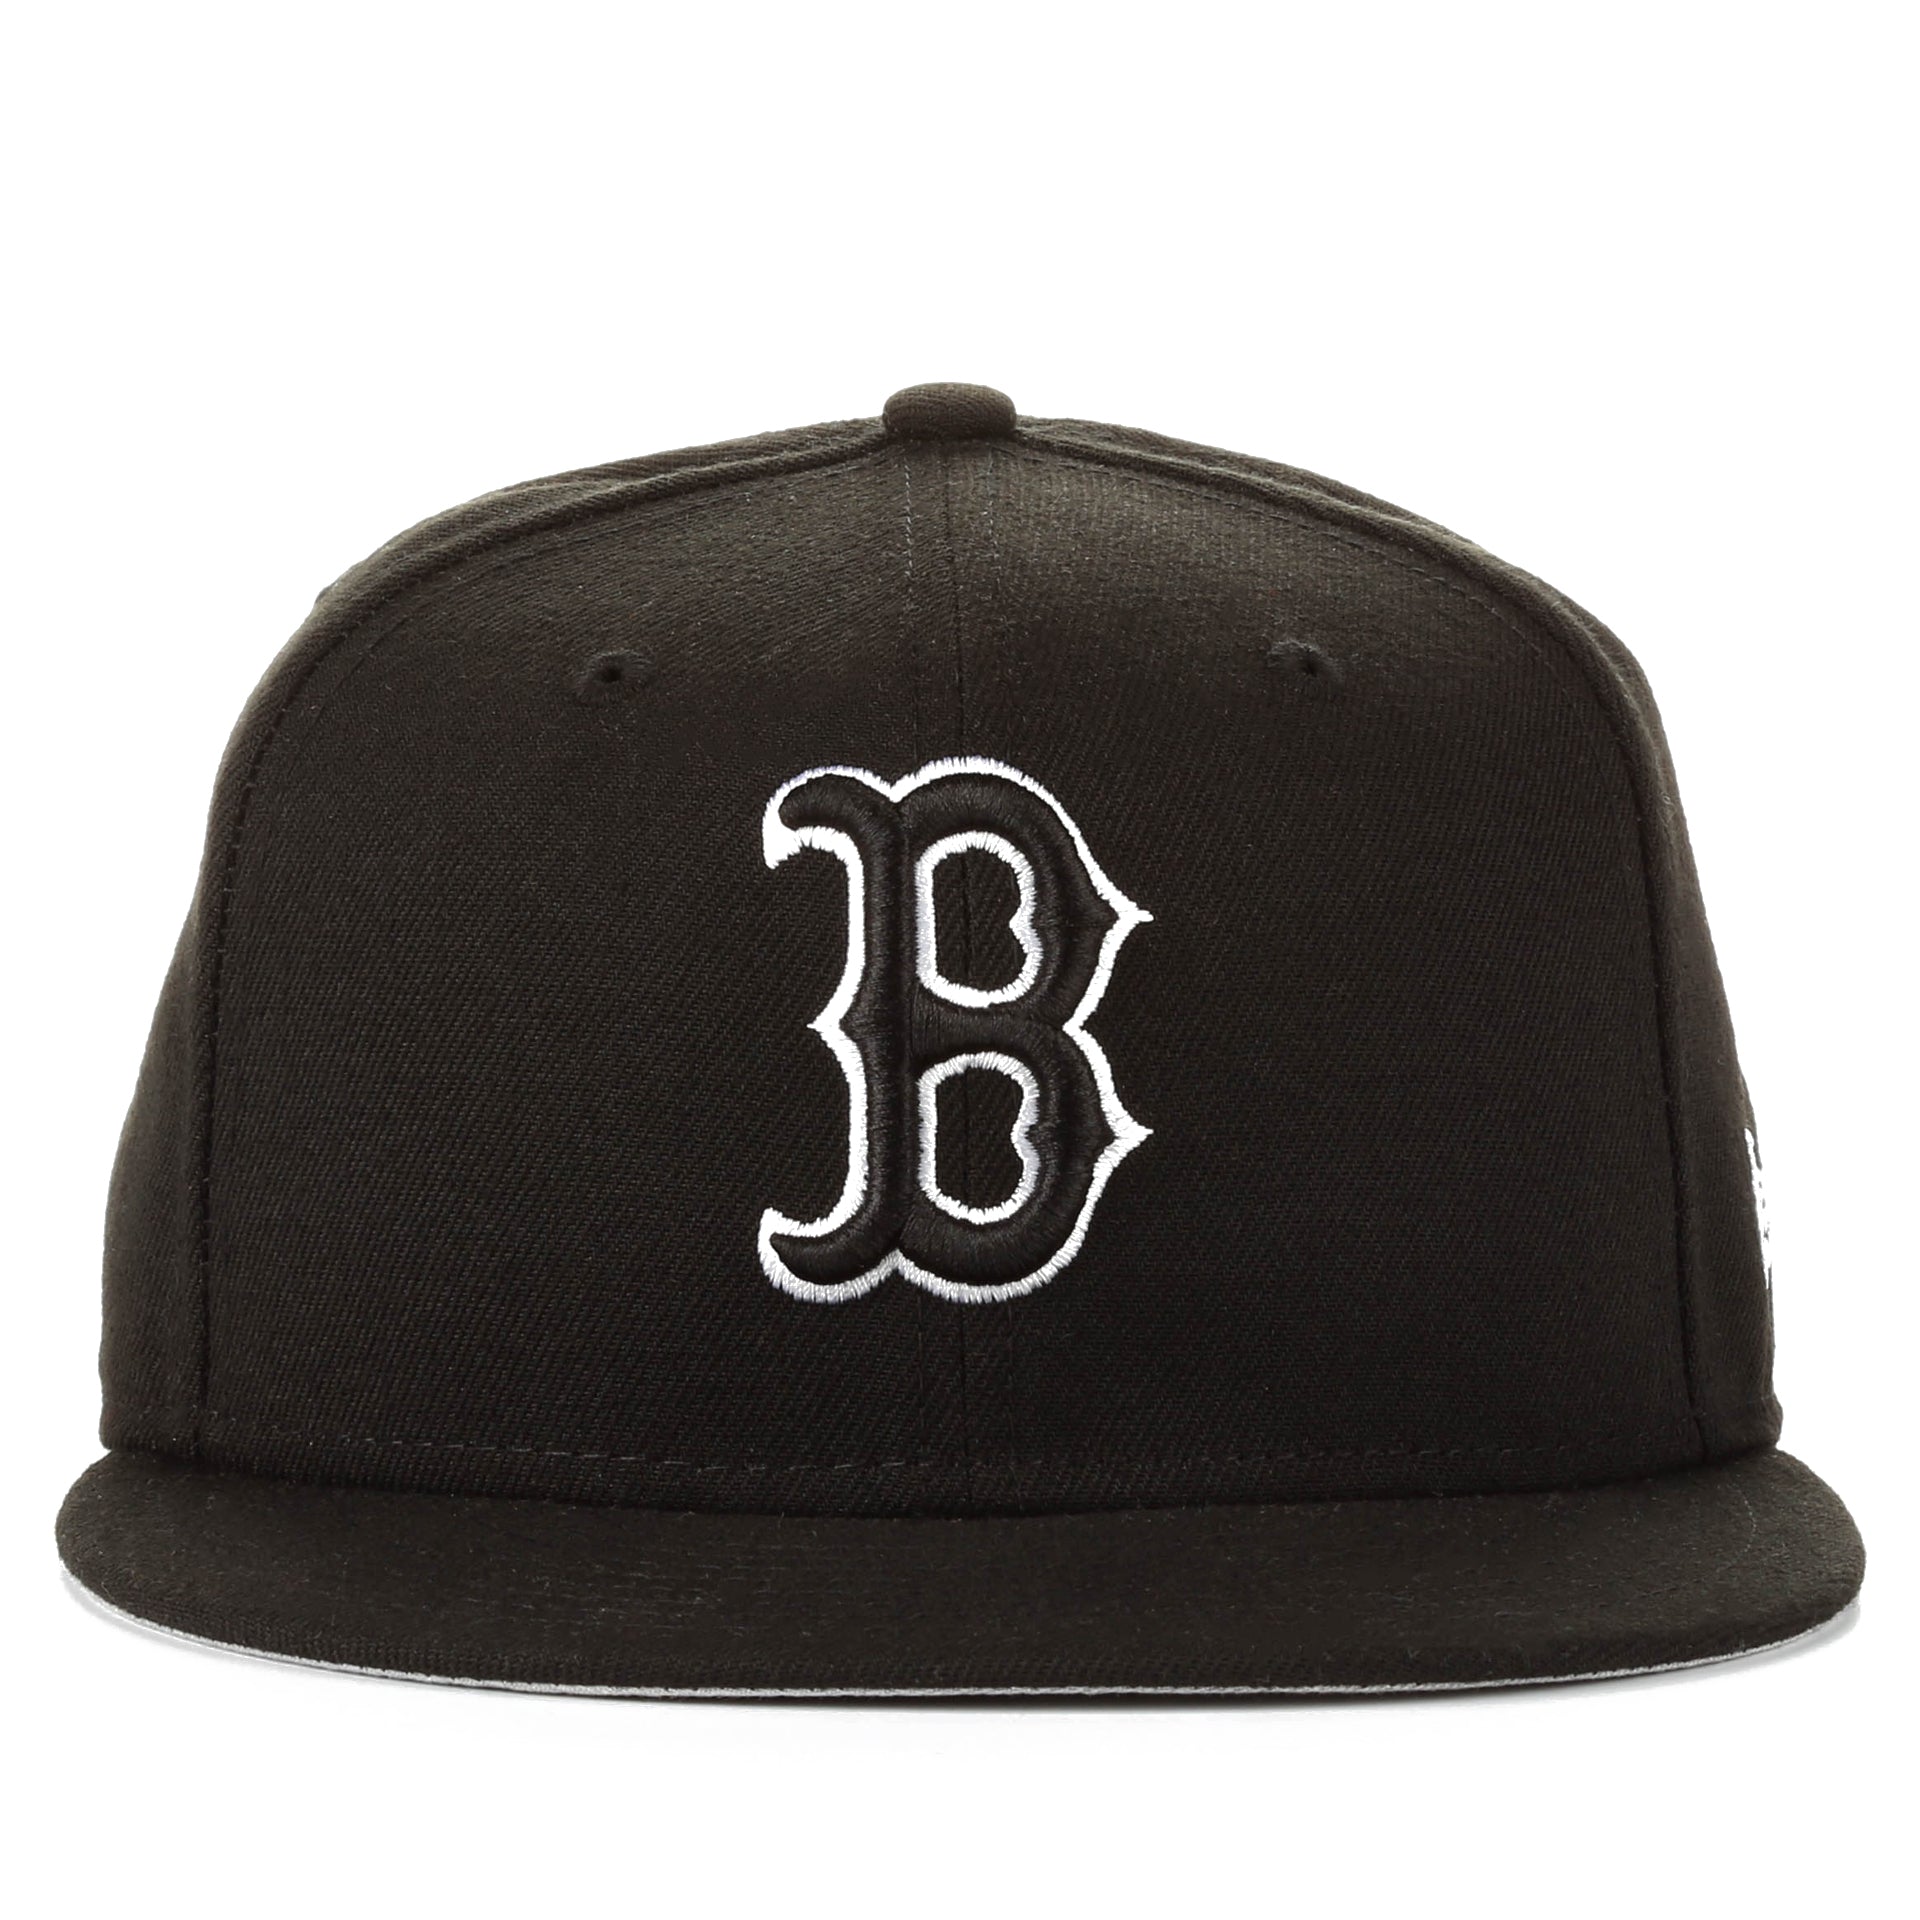 Nieuwe aankomst muziek ongeluk New Era 59Fifty League Basic Fitted Cap - Boston Red Sox/Black - New Star